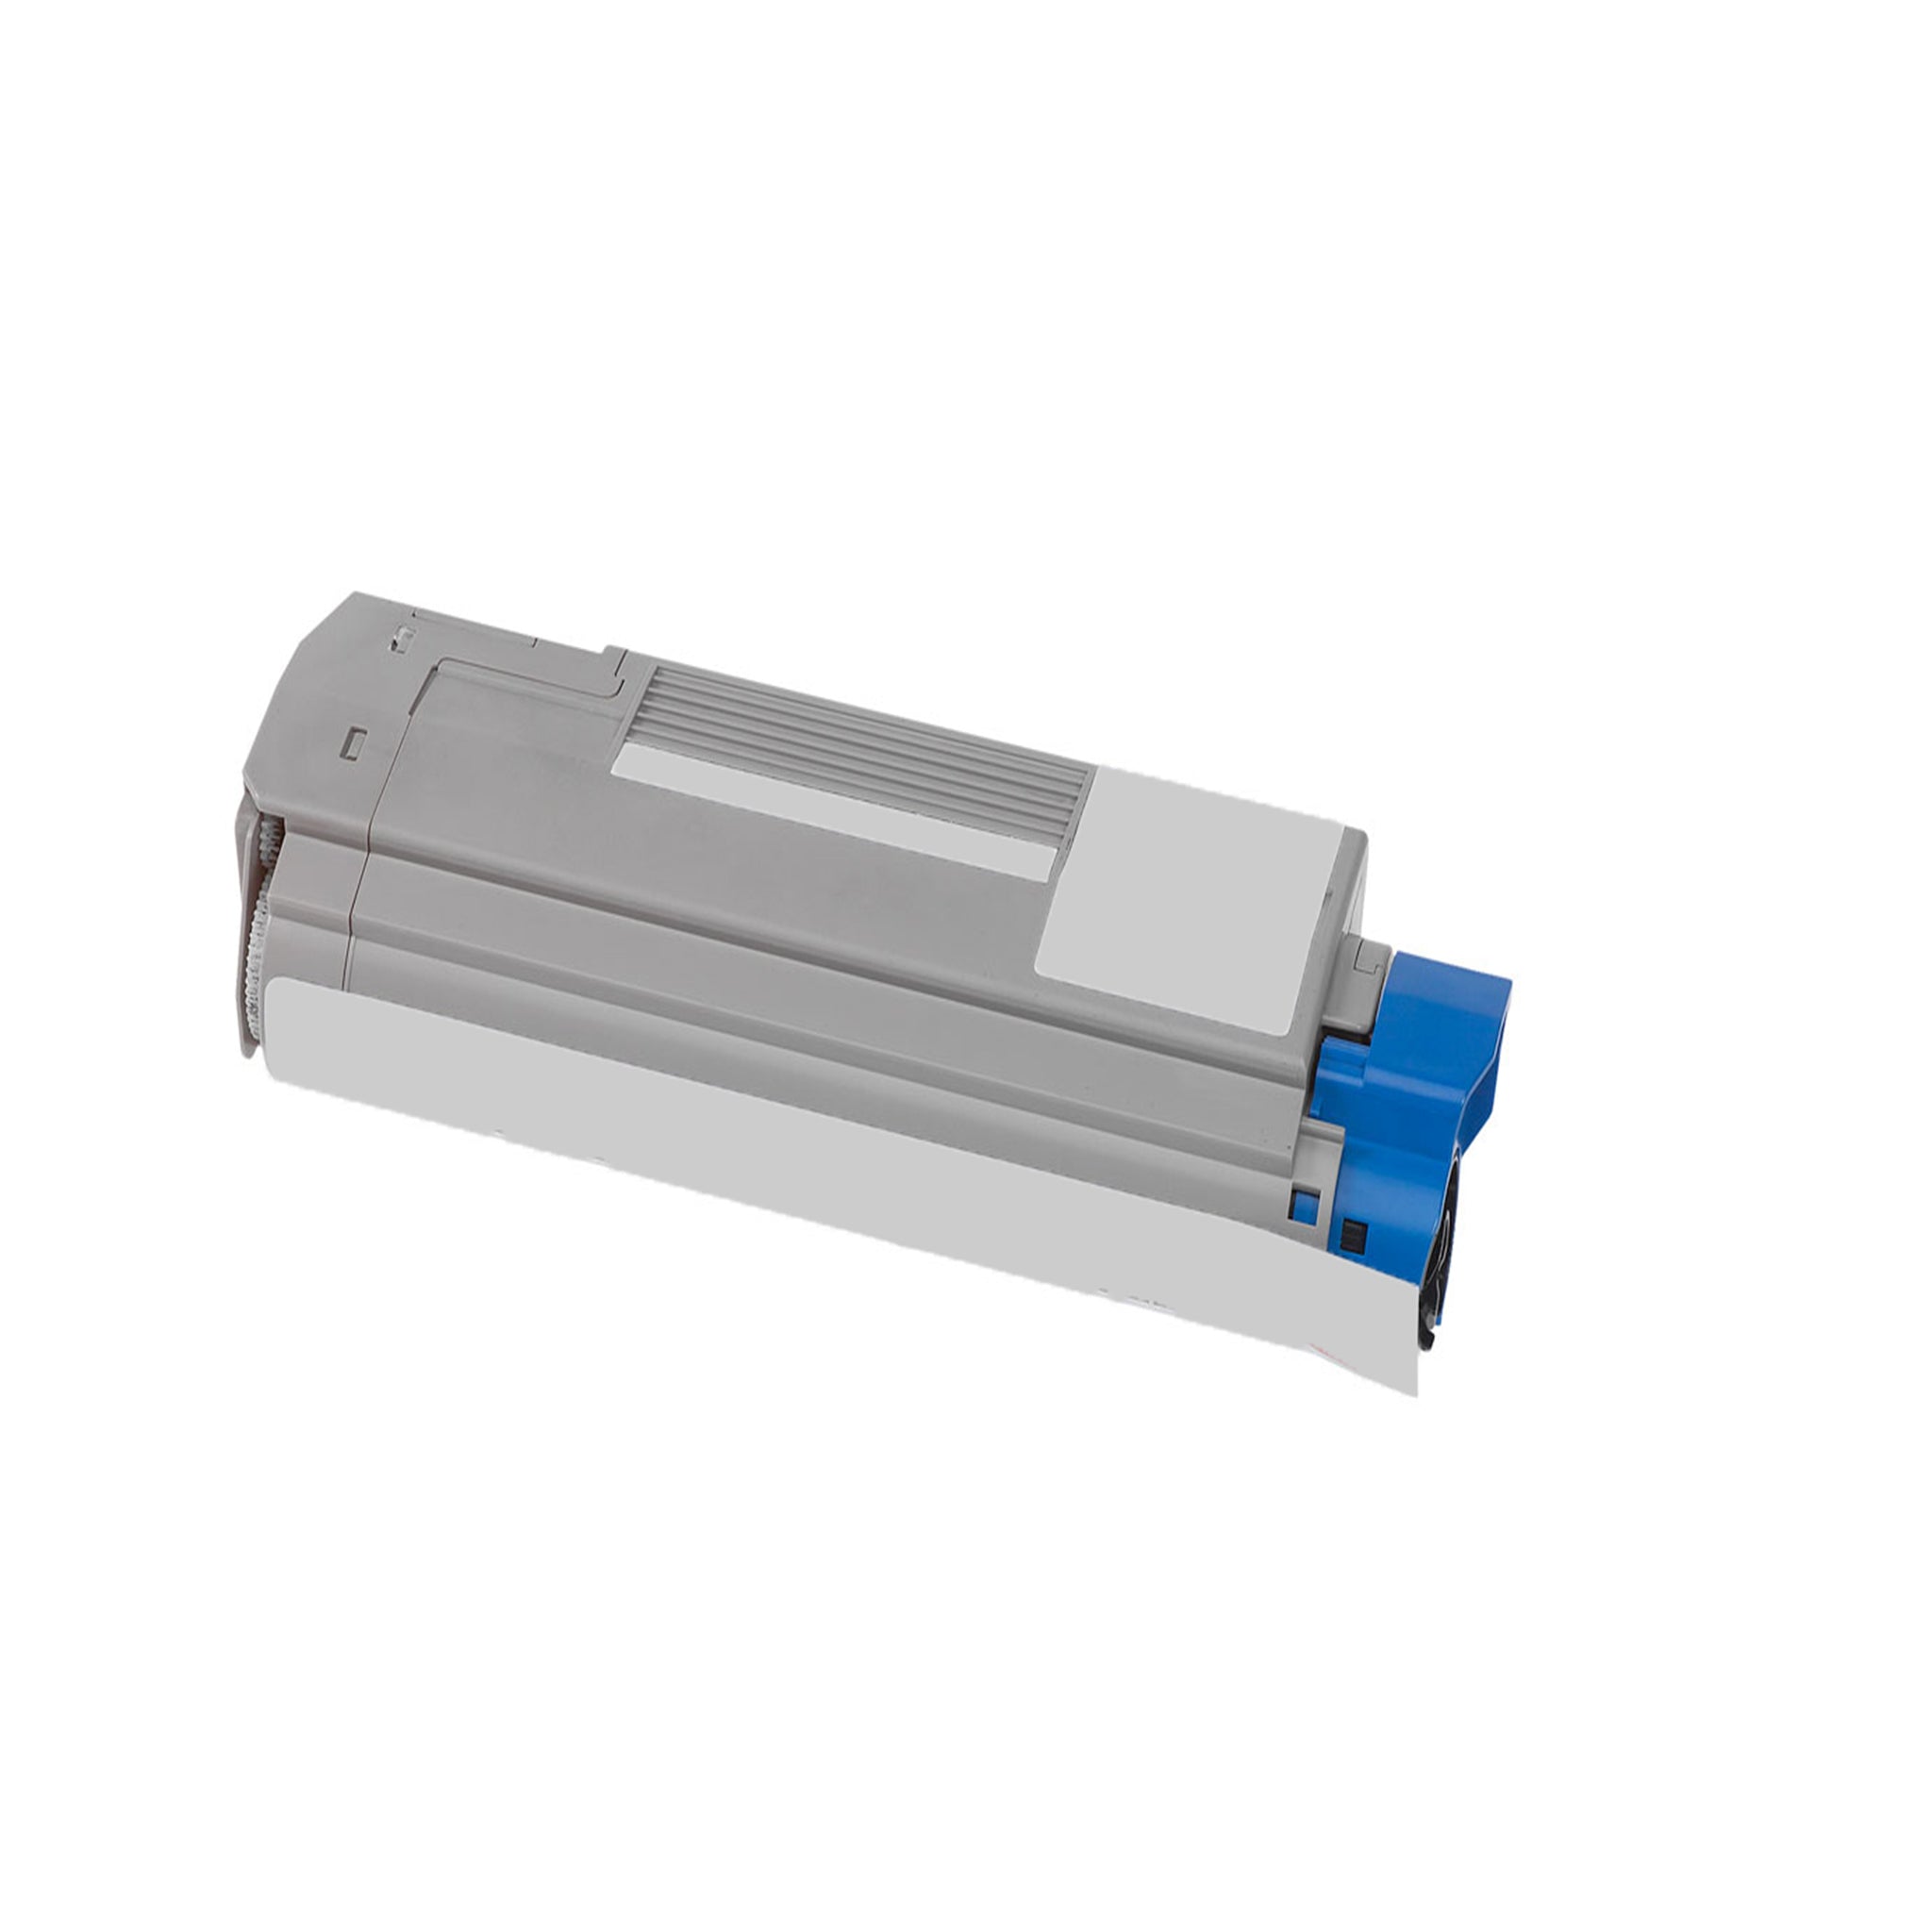 Toner cartridge compatible with OKI C5600/5700